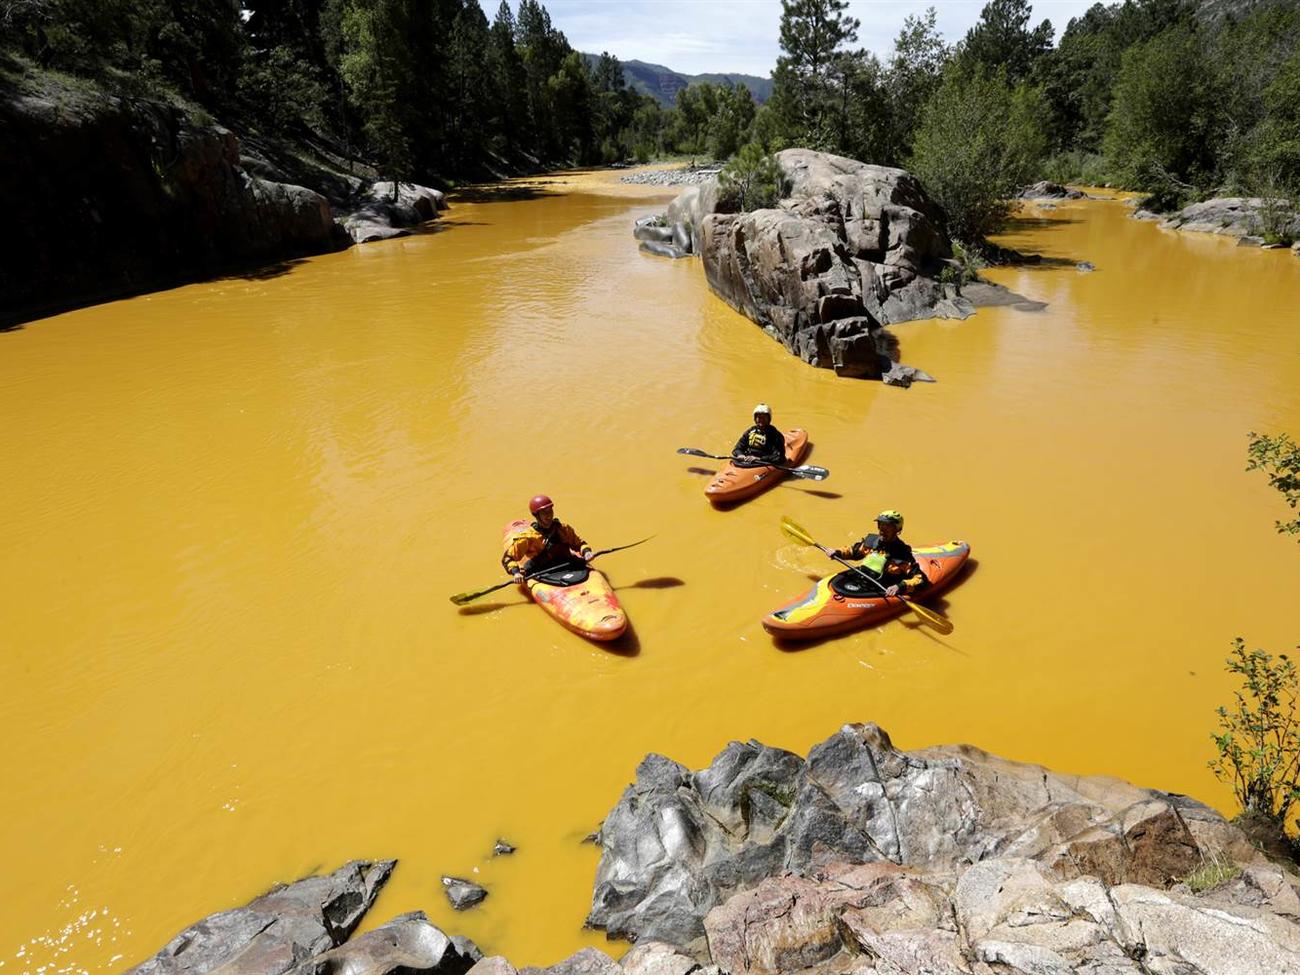 Mine waste contamination turns Colorado river completely orange